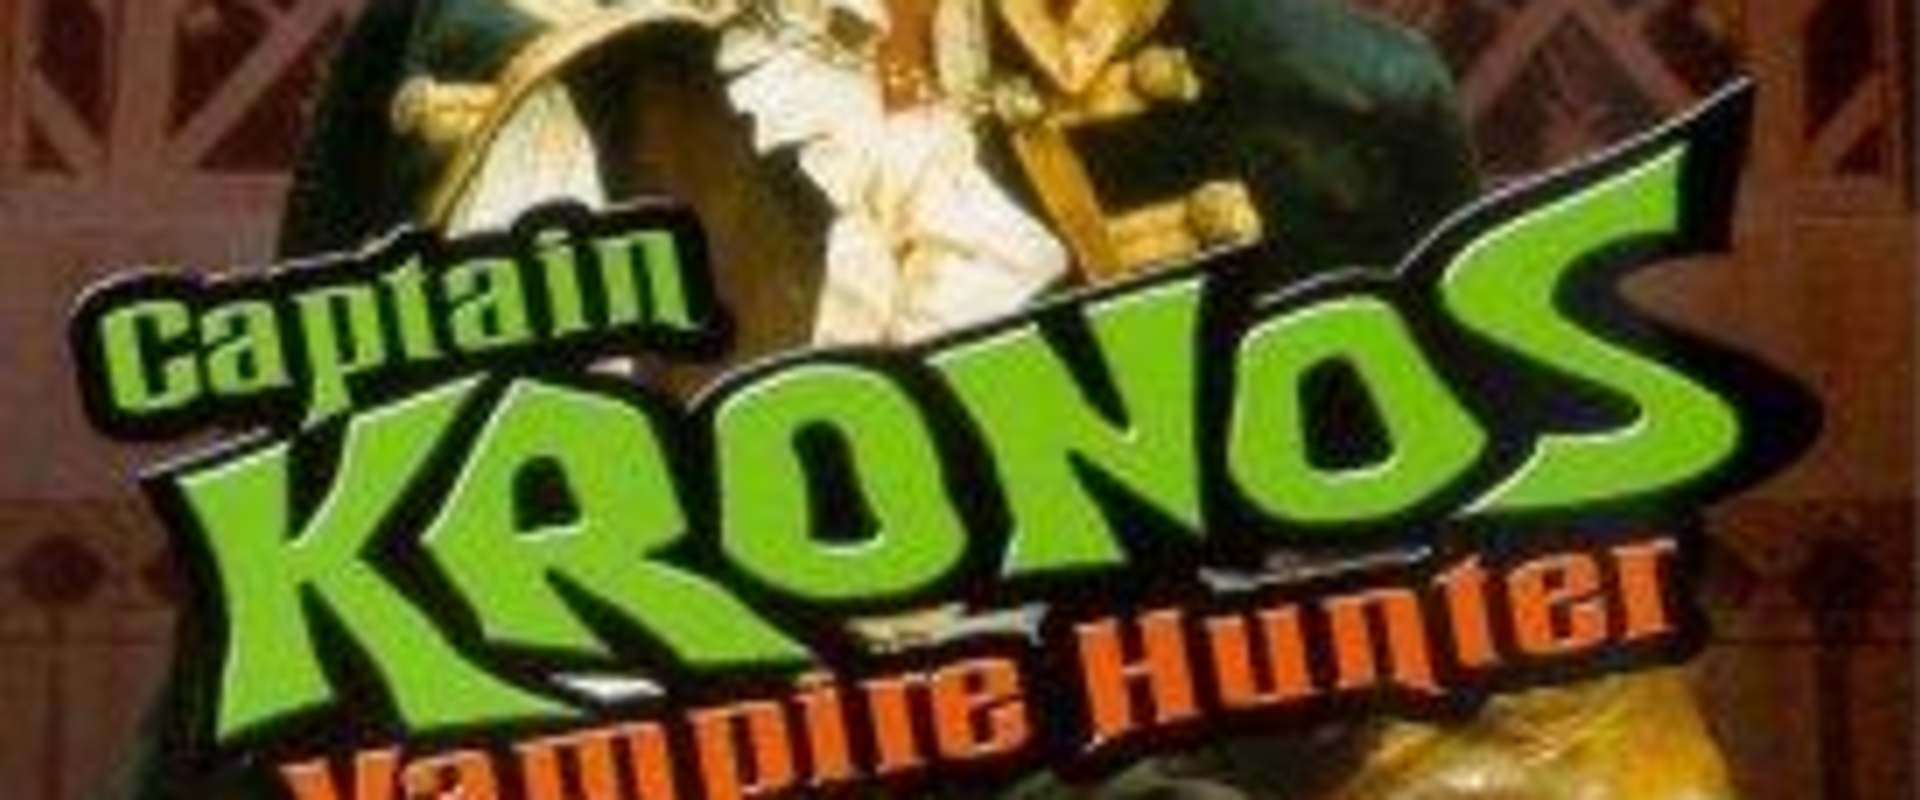 Captain Kronos: Vampire Hunter background 1